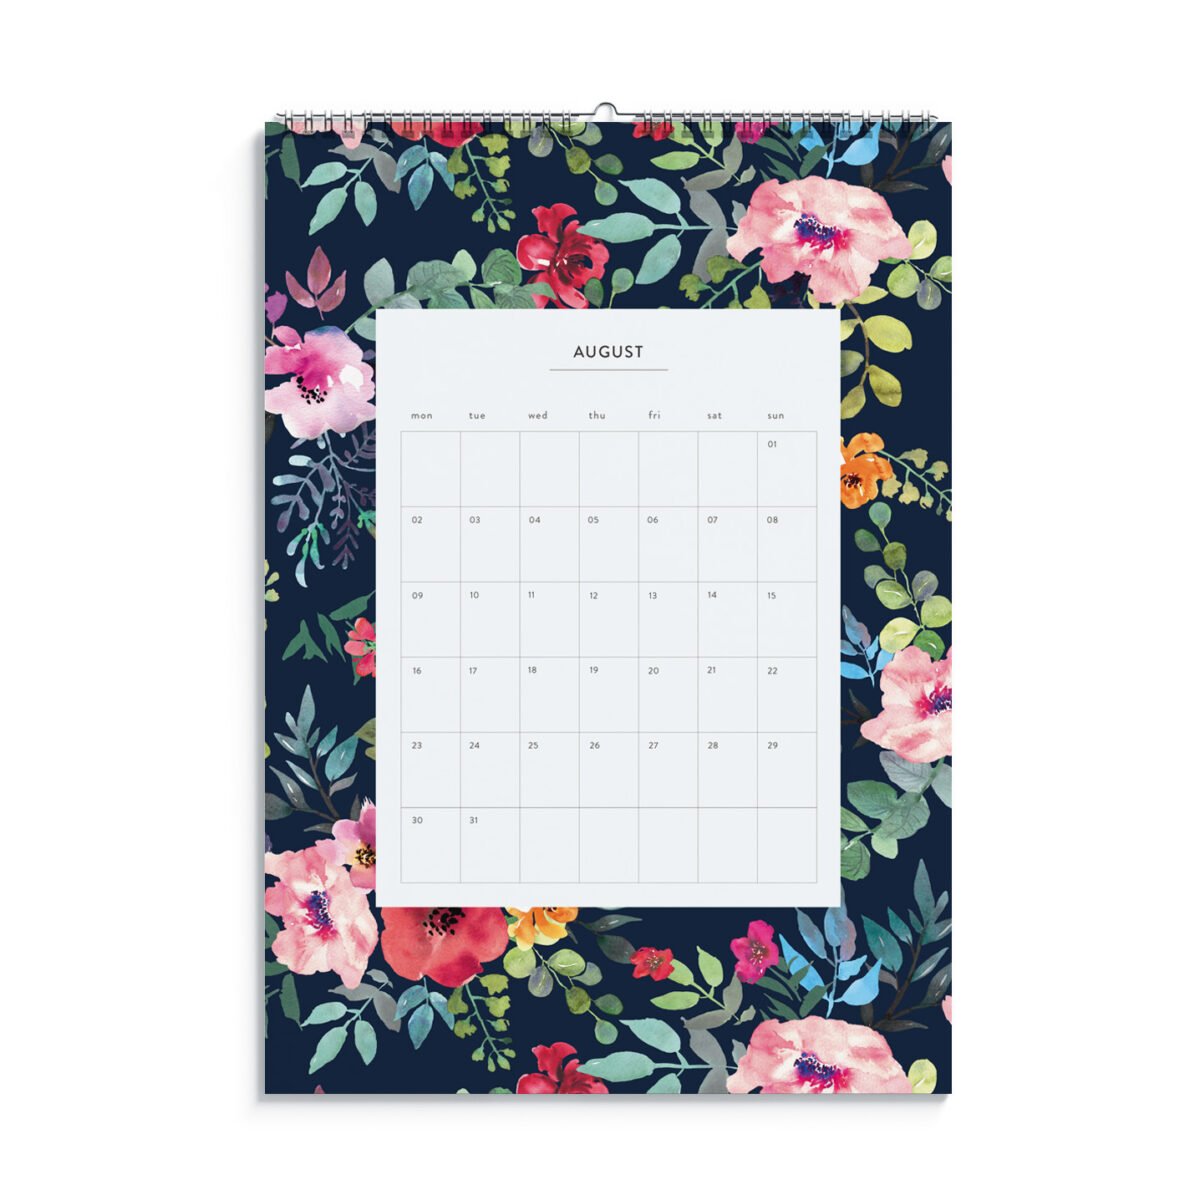 Watercolour Flowers 2021 Monthly Wall Calendar